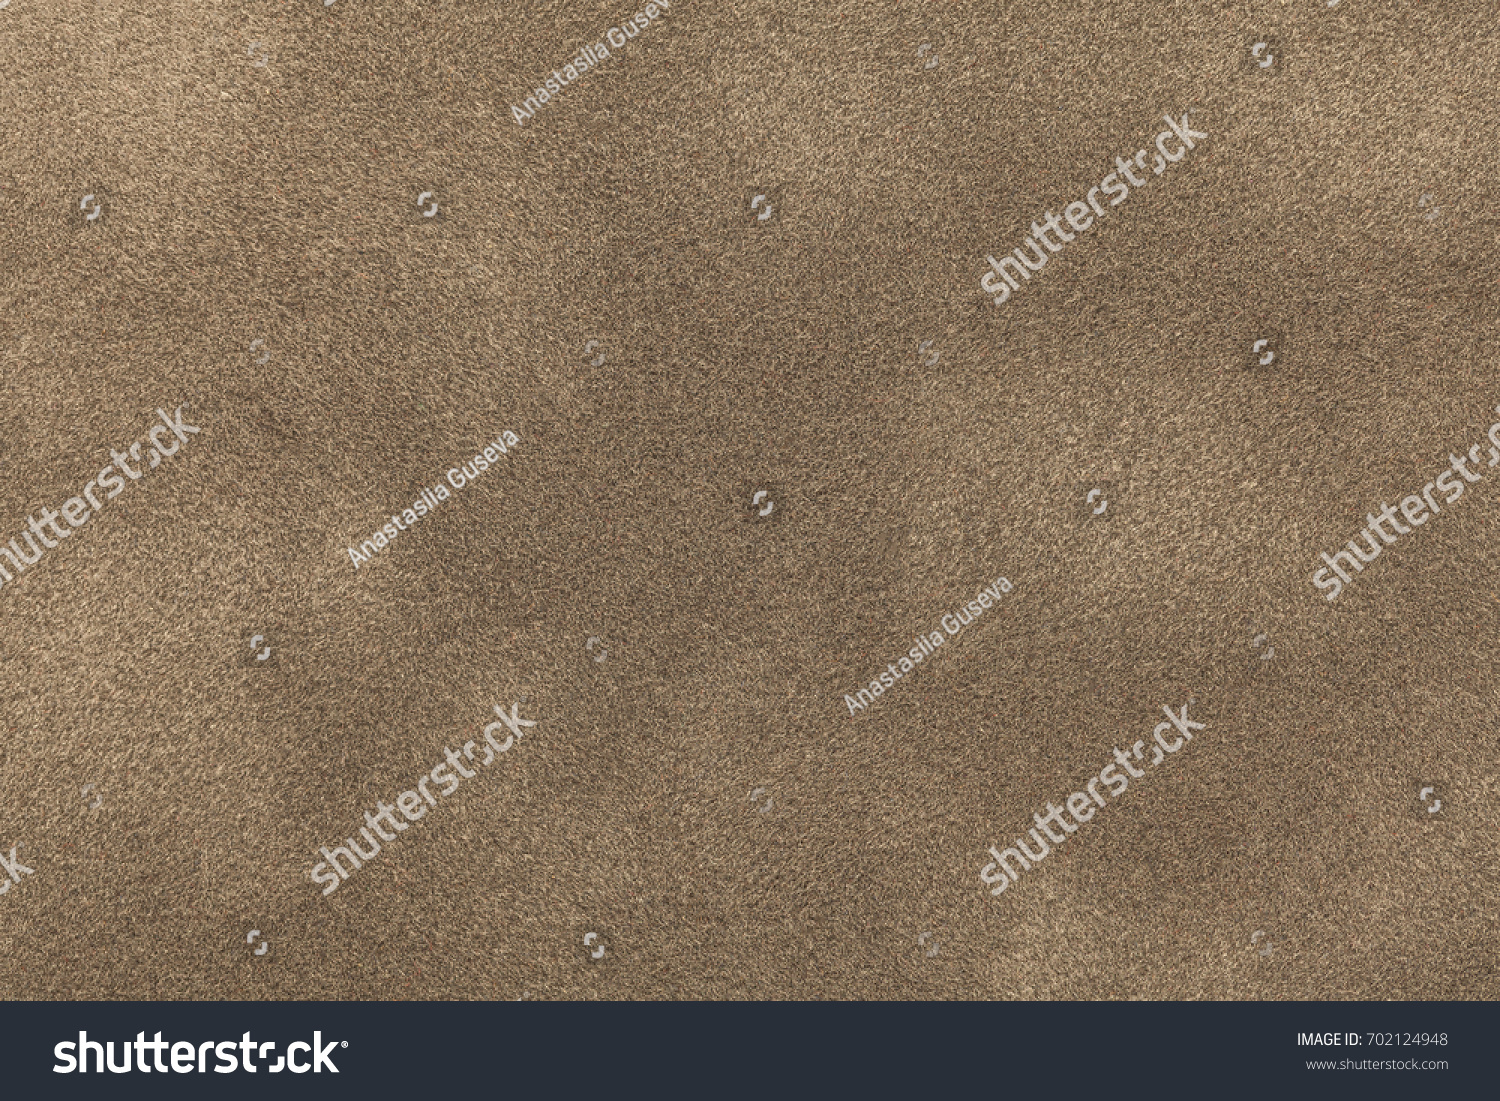 Background of light bronze suede fabric closeup. Velvet matt texture of sand nubuck textile. #702124948